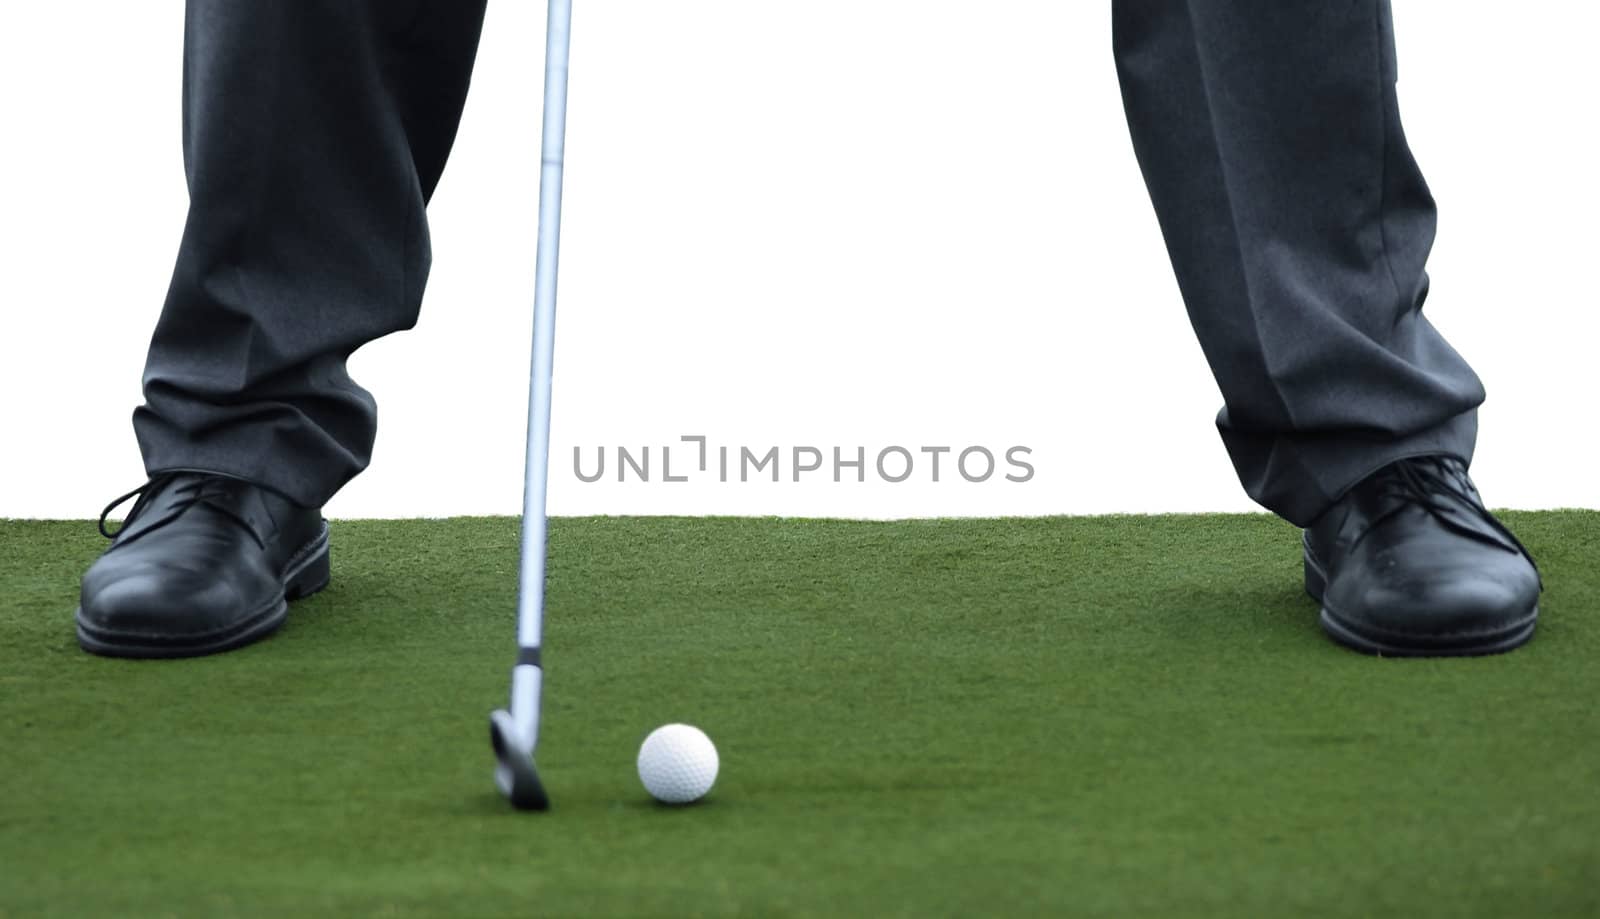 golf stance on green carpet by studio023